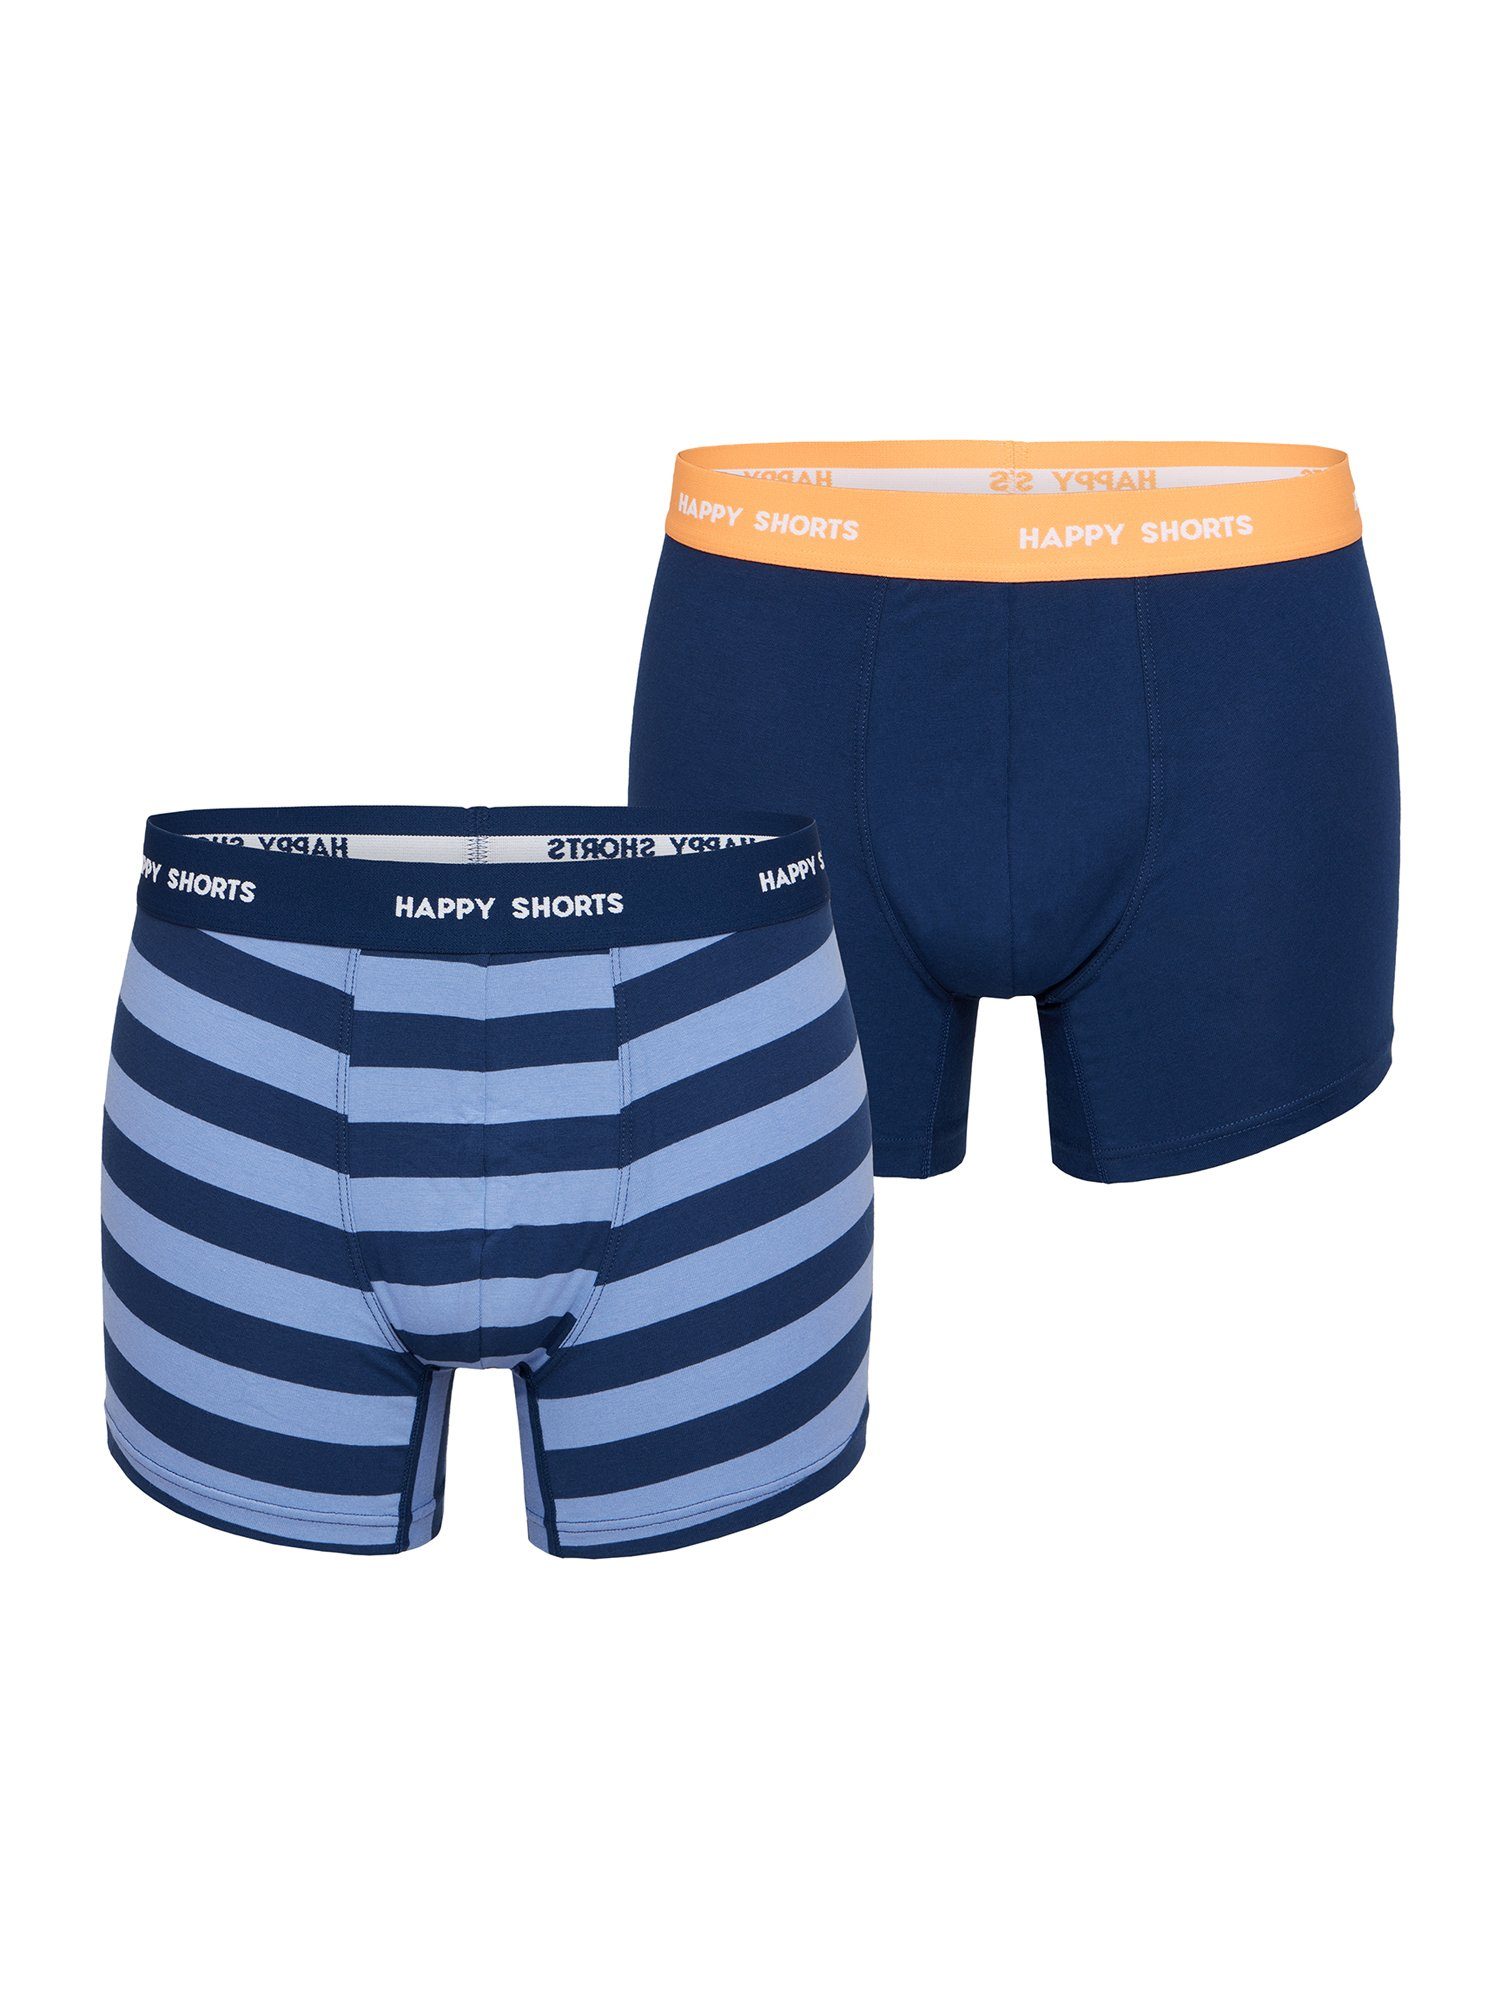 HAPPY SHORTS Retro Pants Trunks (2-St) Retro-Boxer Retro-shorts unterhose Mid Blue Blockstripe